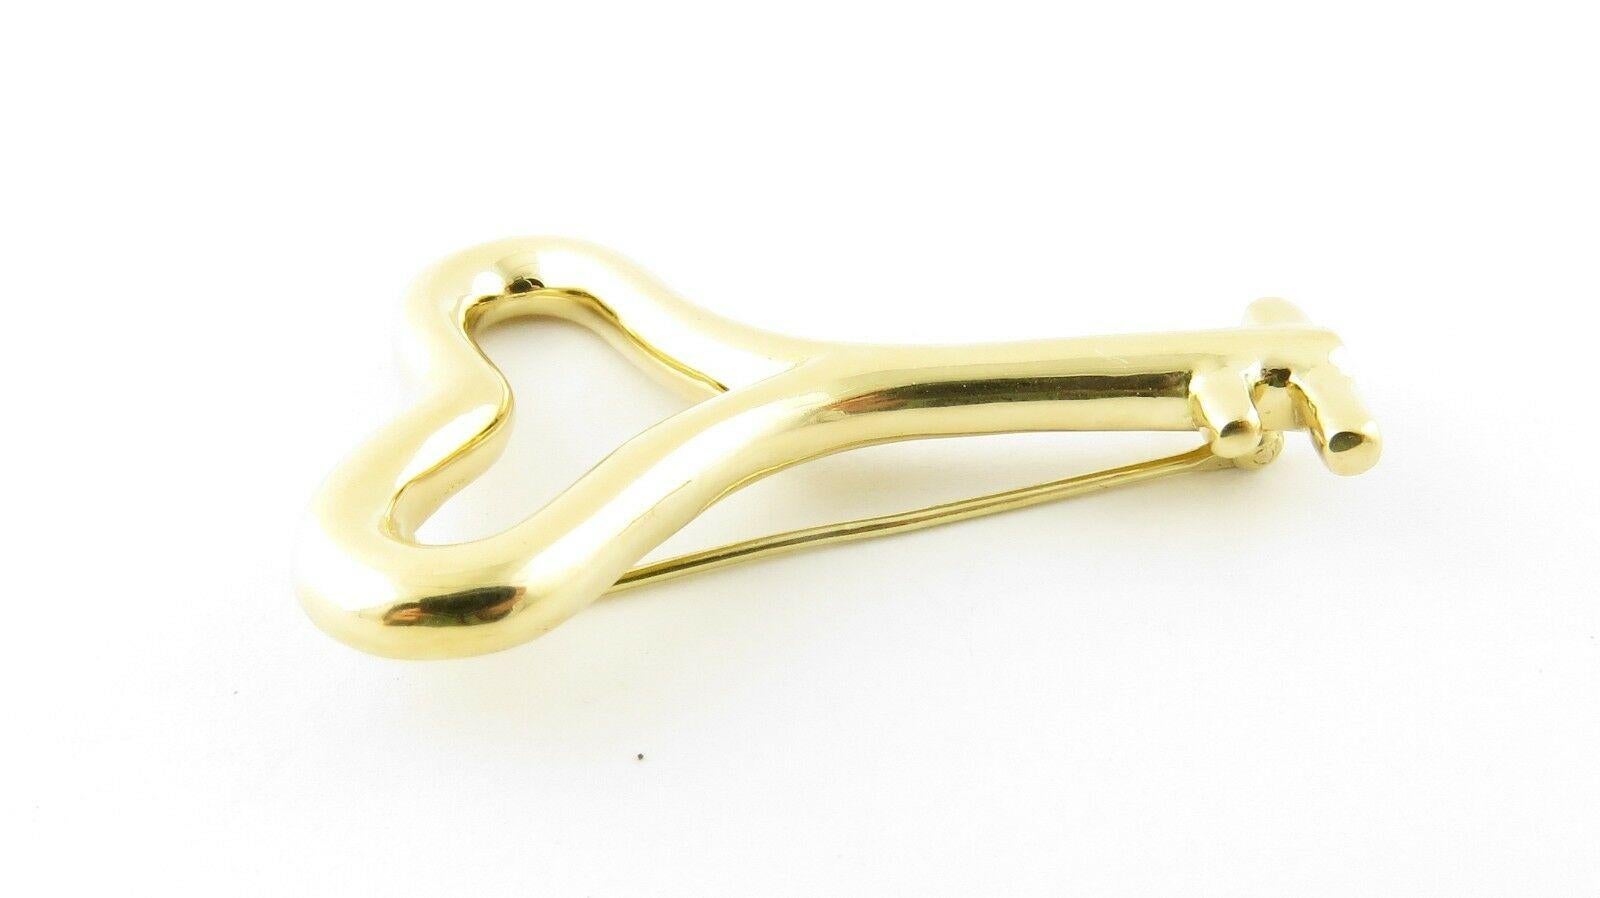 1993 Angela Cummings 18 Karat Yellow Gold Heart Key Pin Brooch For Sale 1